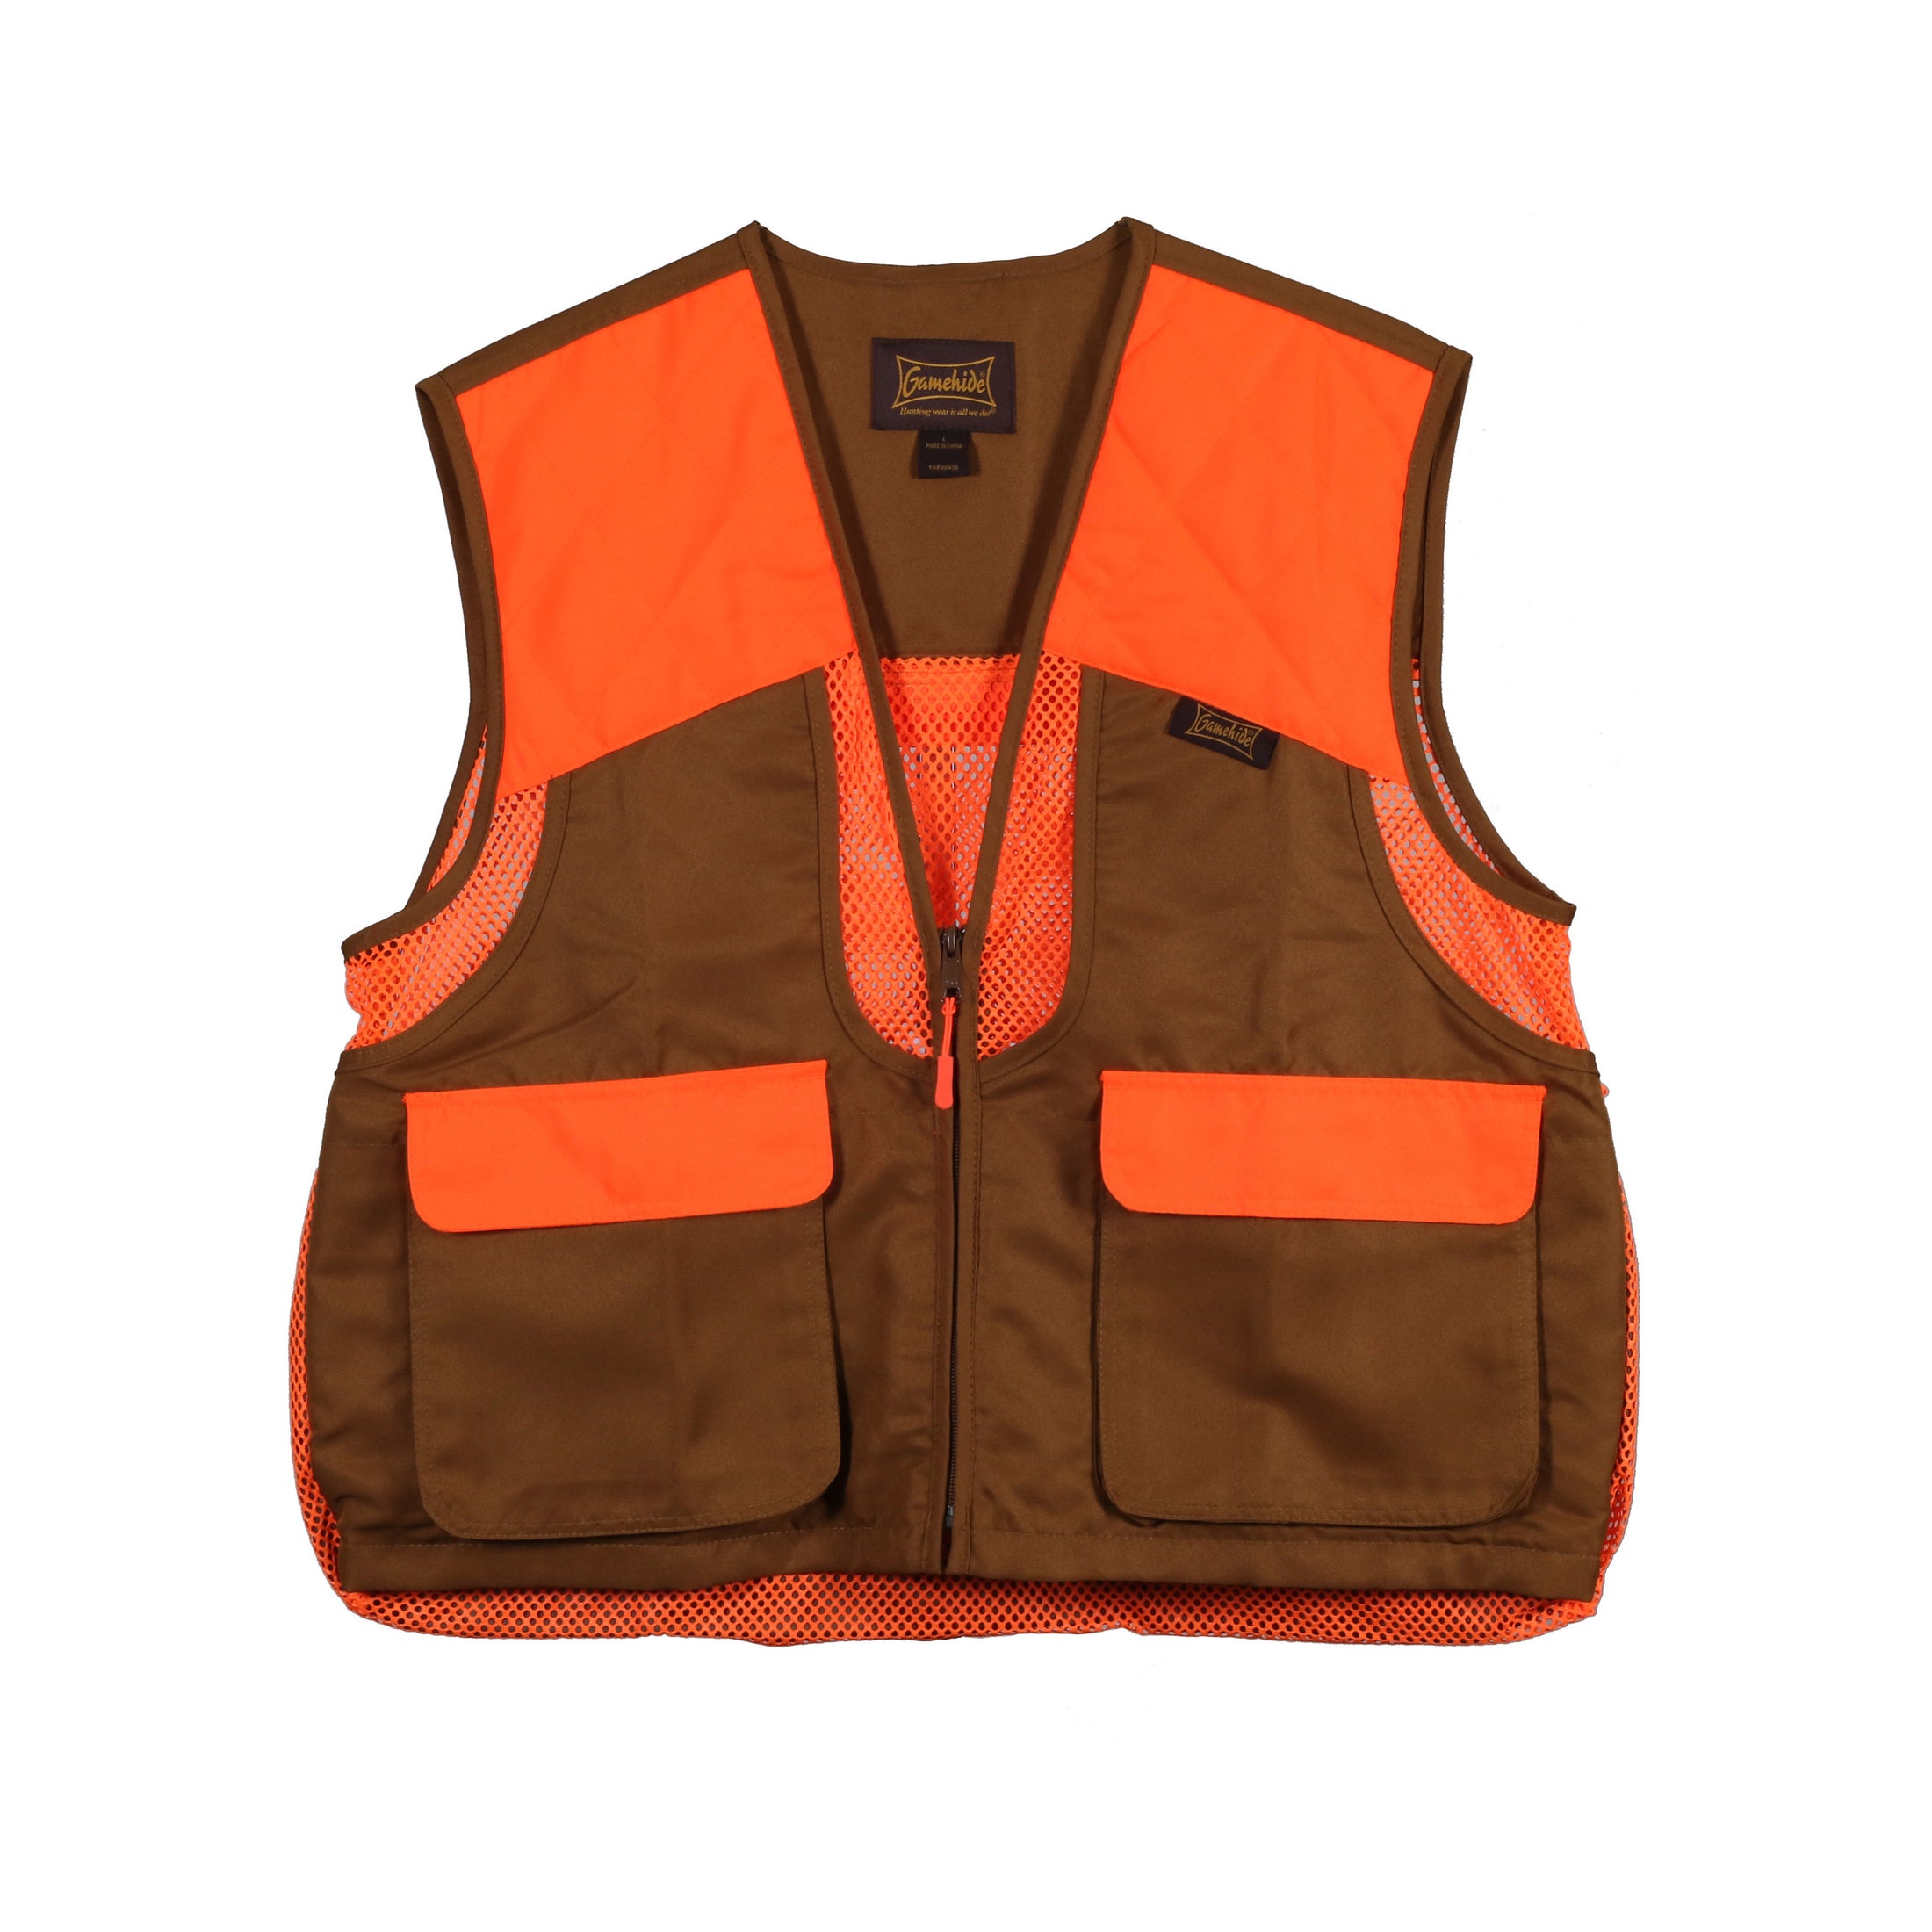 gamehide Quail Vest front (marsh brown/orange)